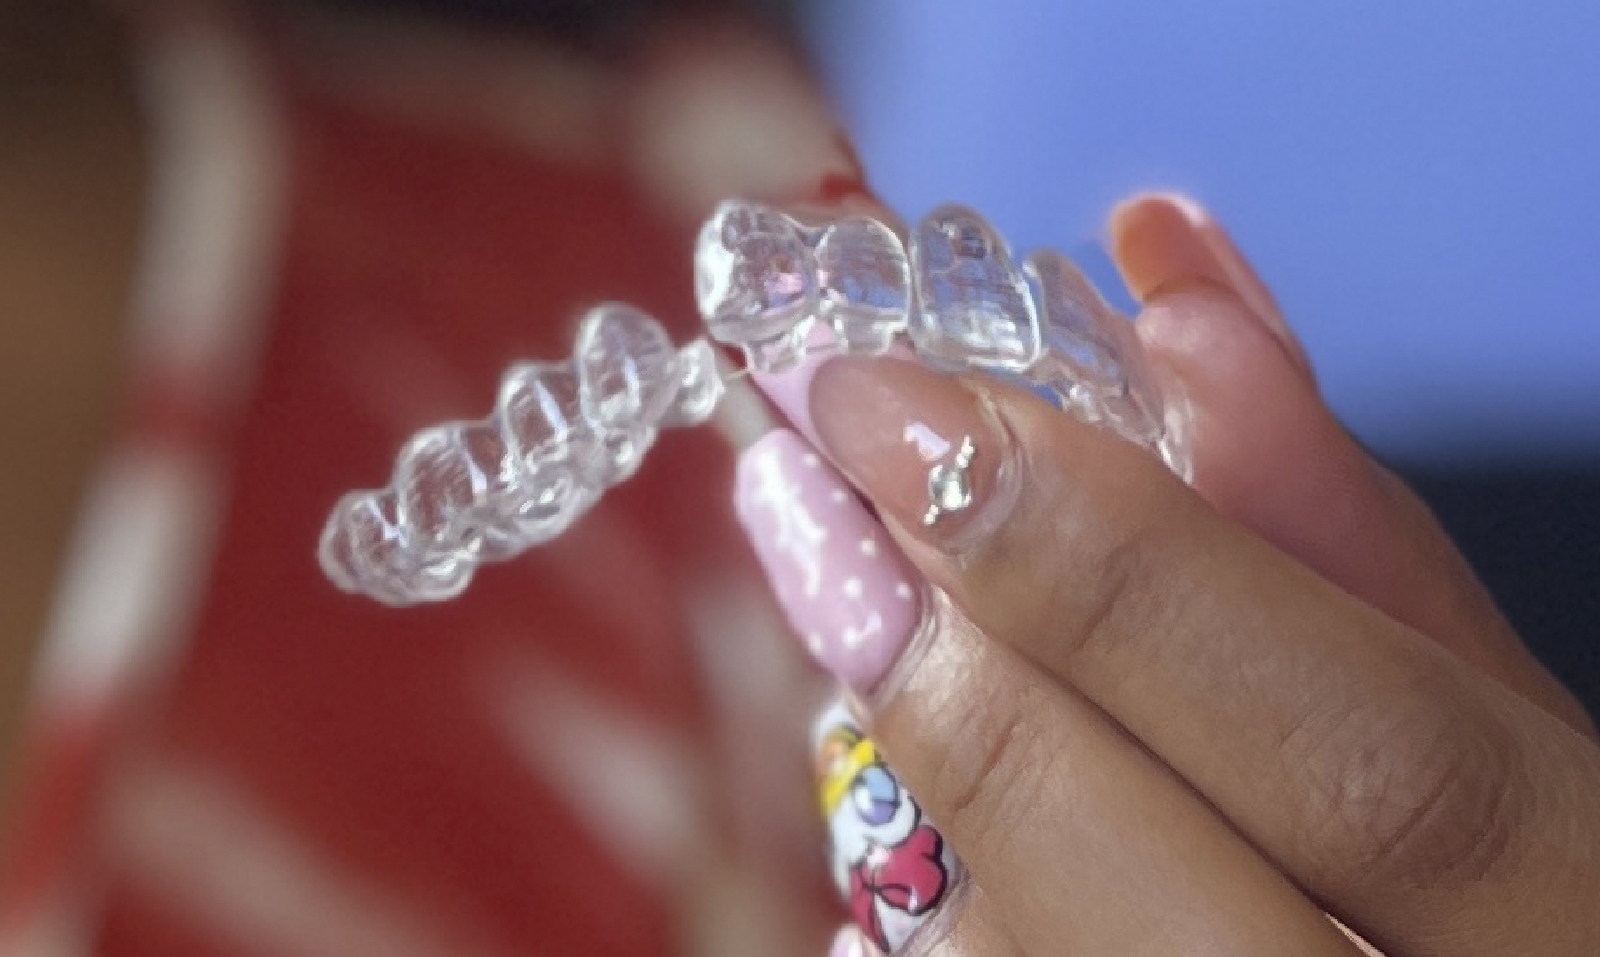 Ortodoncia invisible como solución a la maloclusión dental